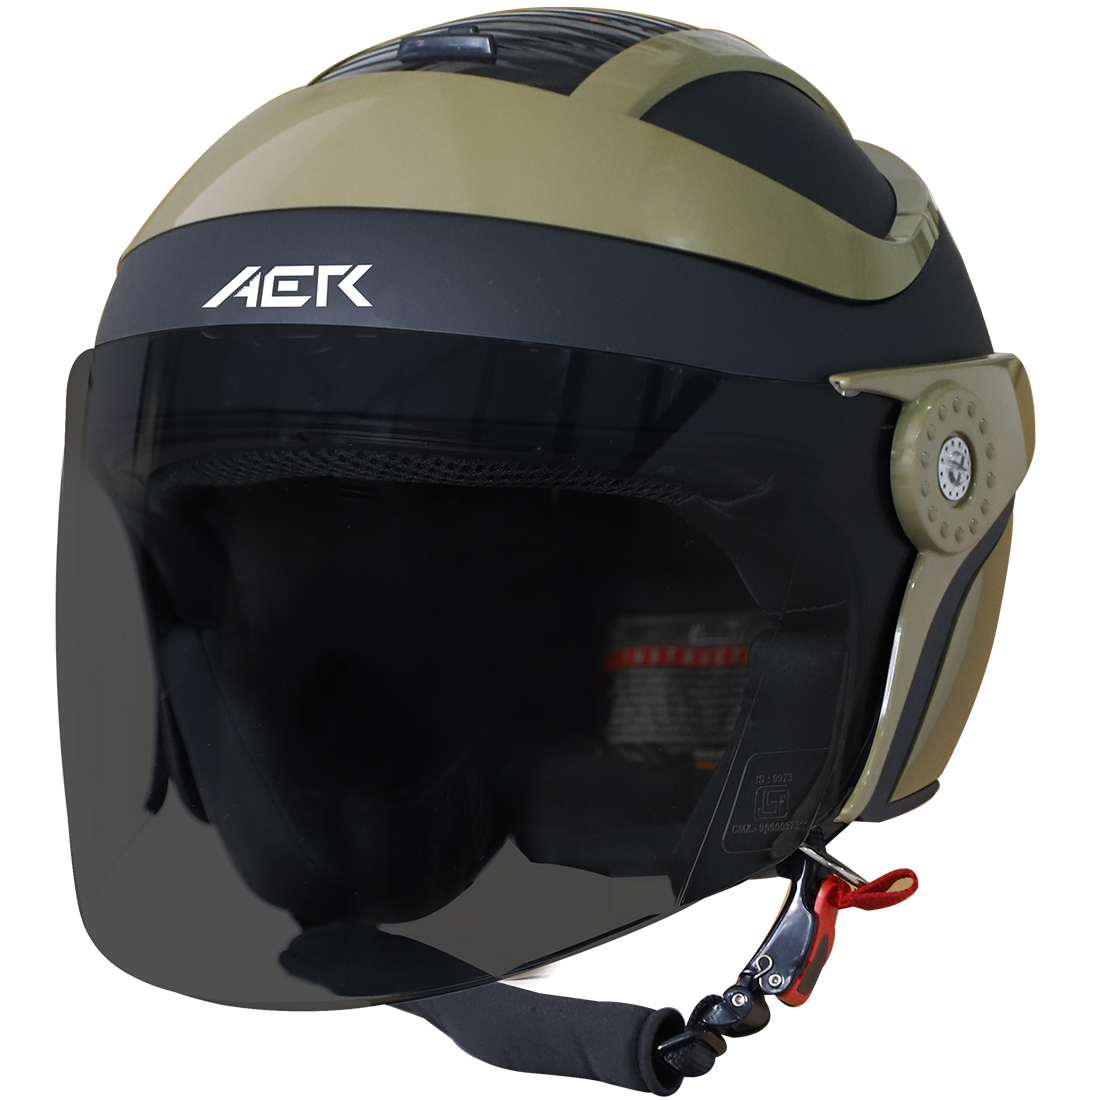 Steelbird SB-29 AER ISI Certified Open Face Helmet For Men And Women (Matt Black Desert Storm With Clear Visor)